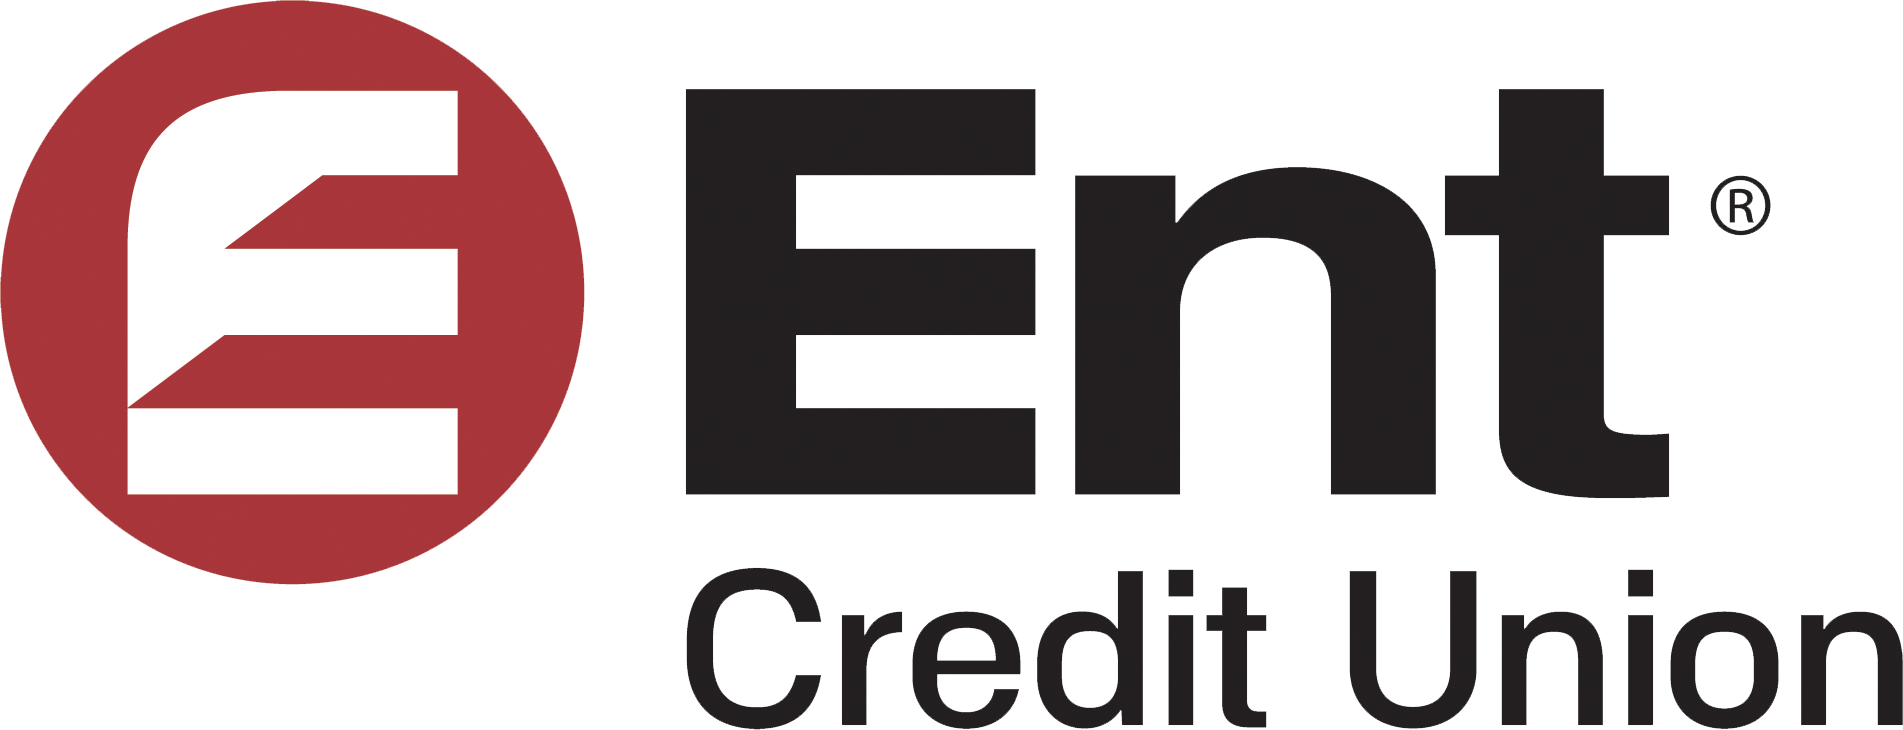 EntCU_Logo_2c (002)- Transparent